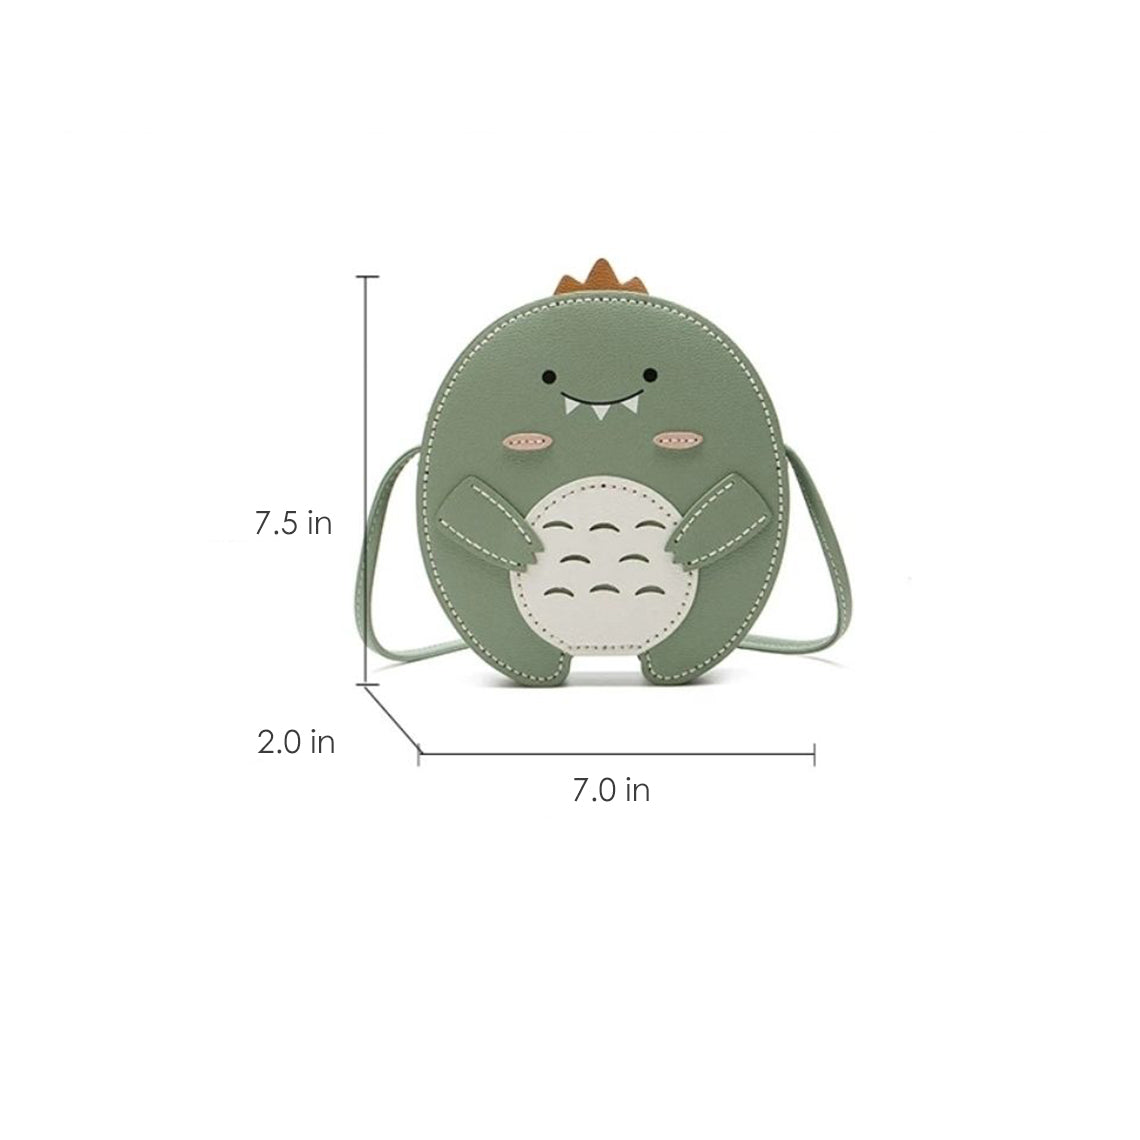 Size of  DIY Dinosaur Bag Purse Wallet | POPSEWING™